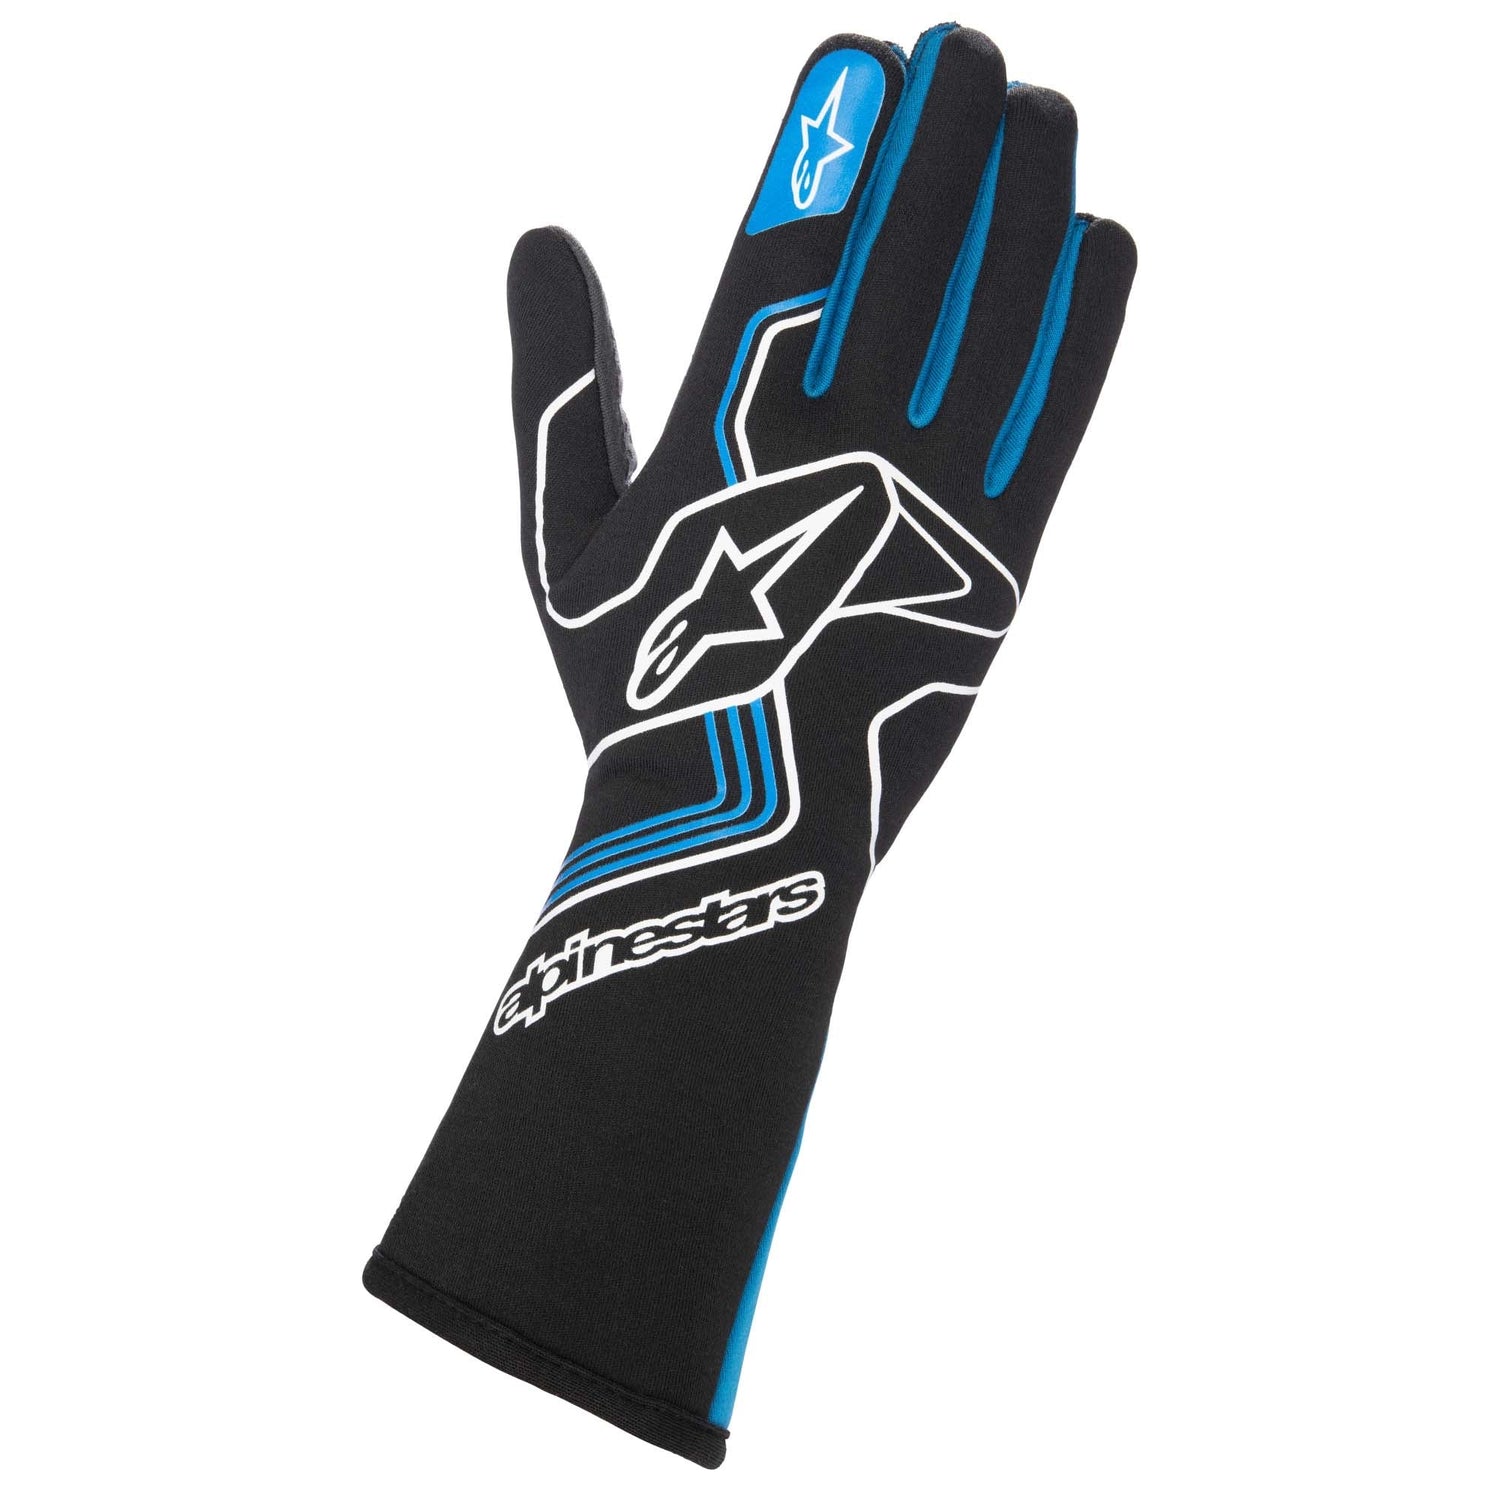 Alpinestars Racing Gloves